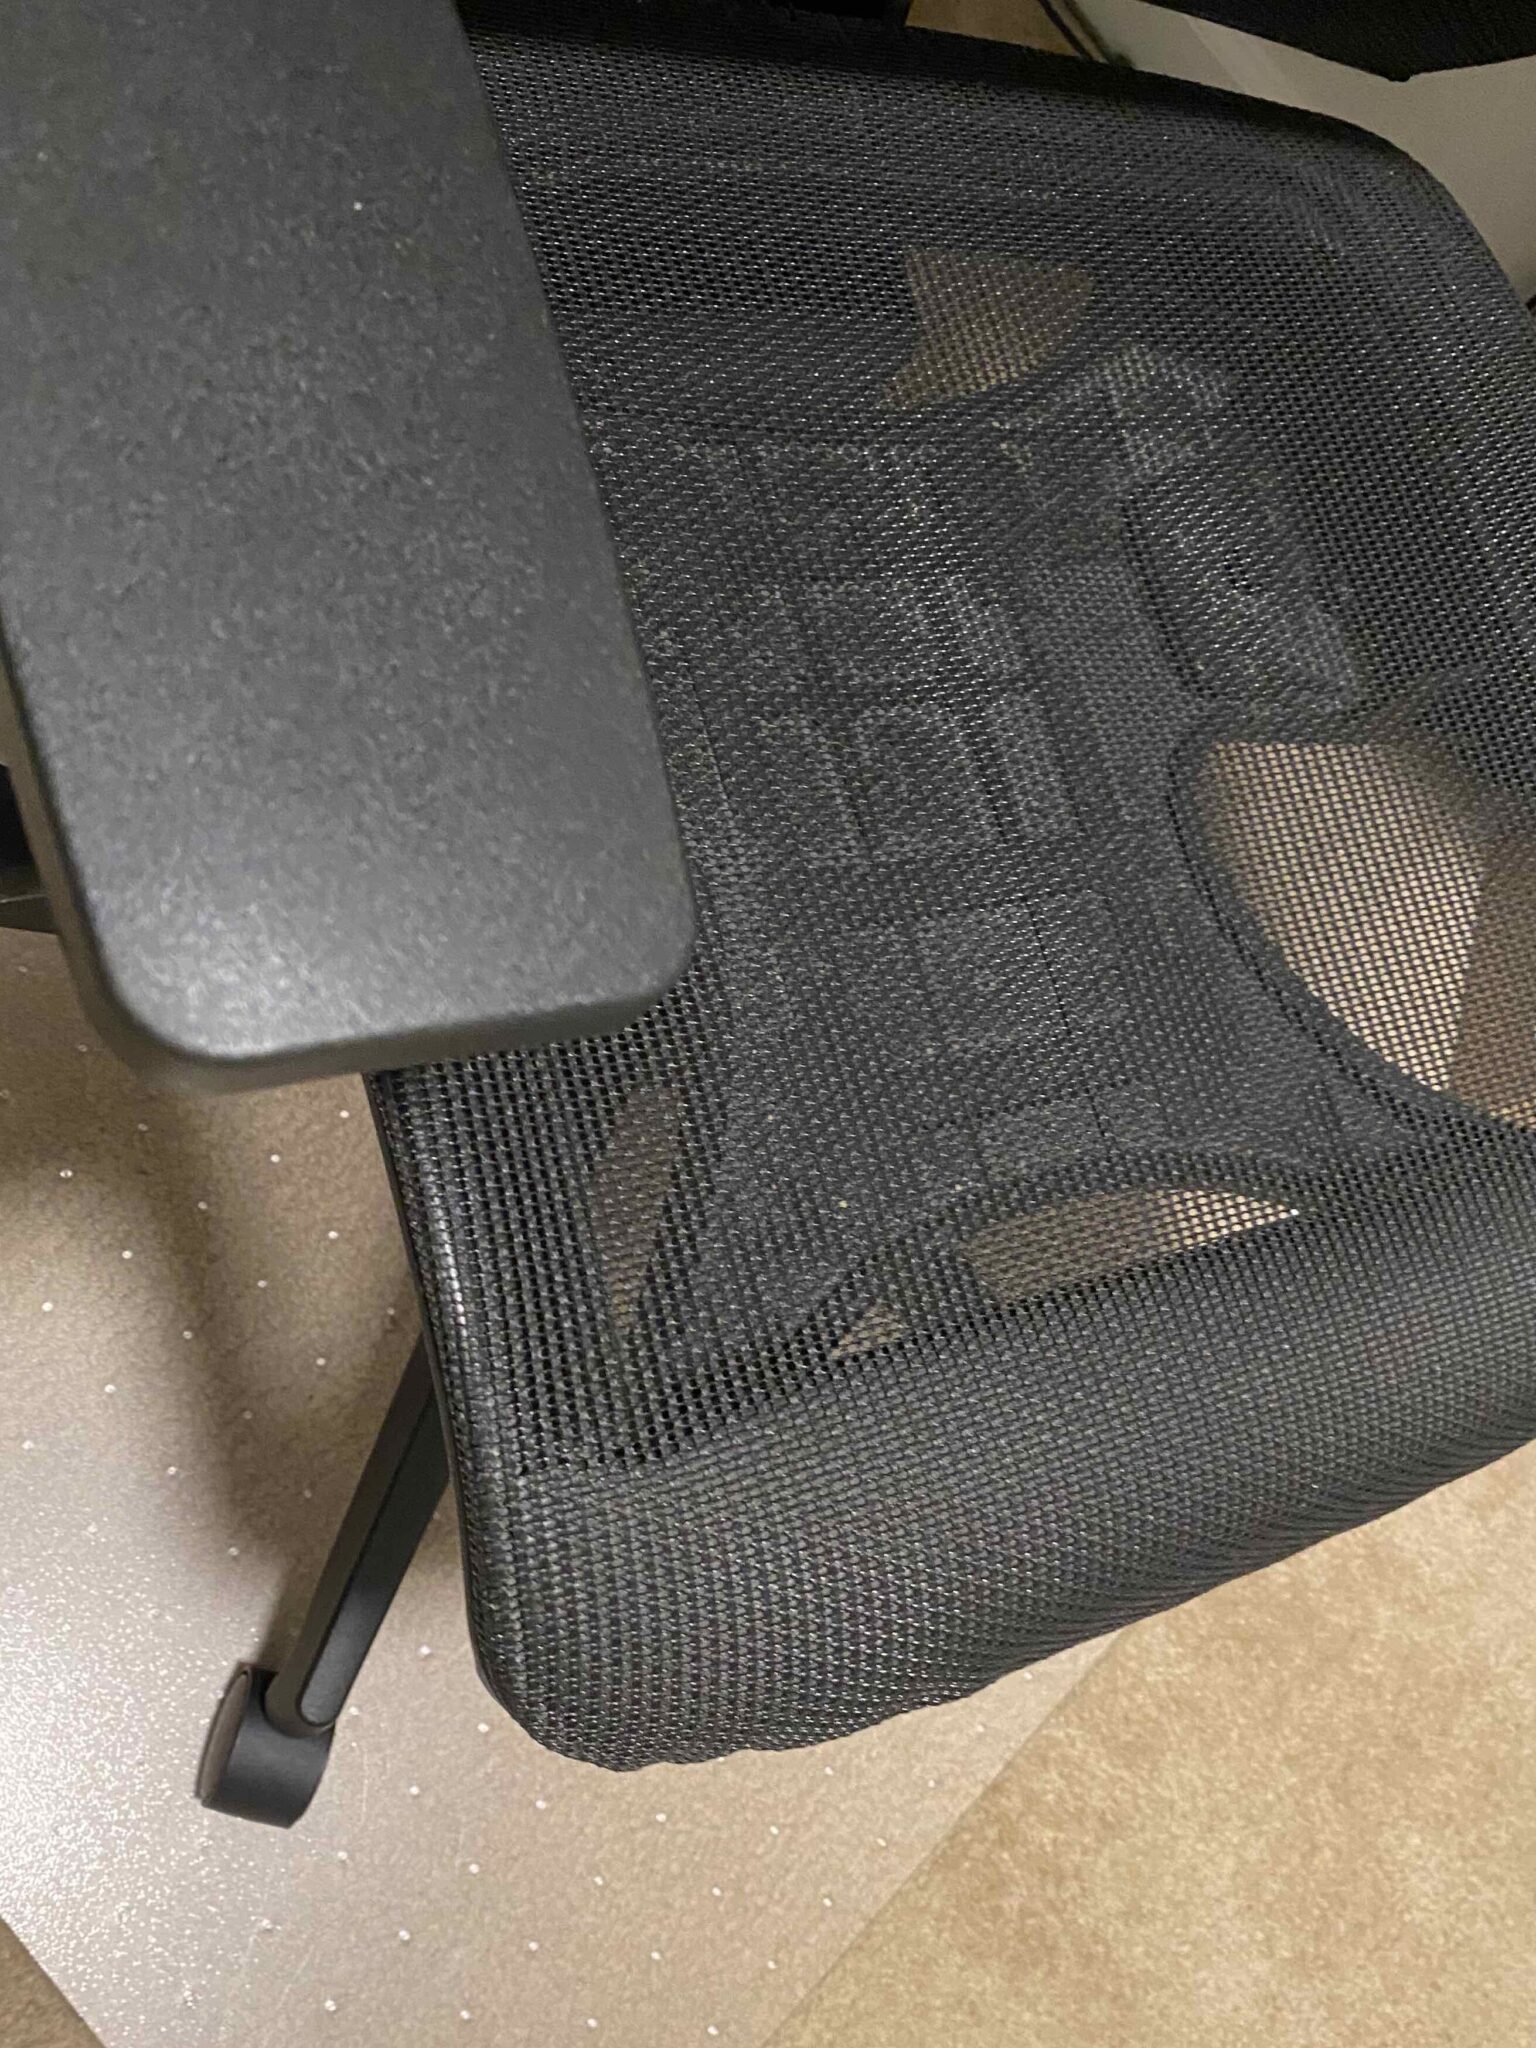 Ergonomic-task-chair-close